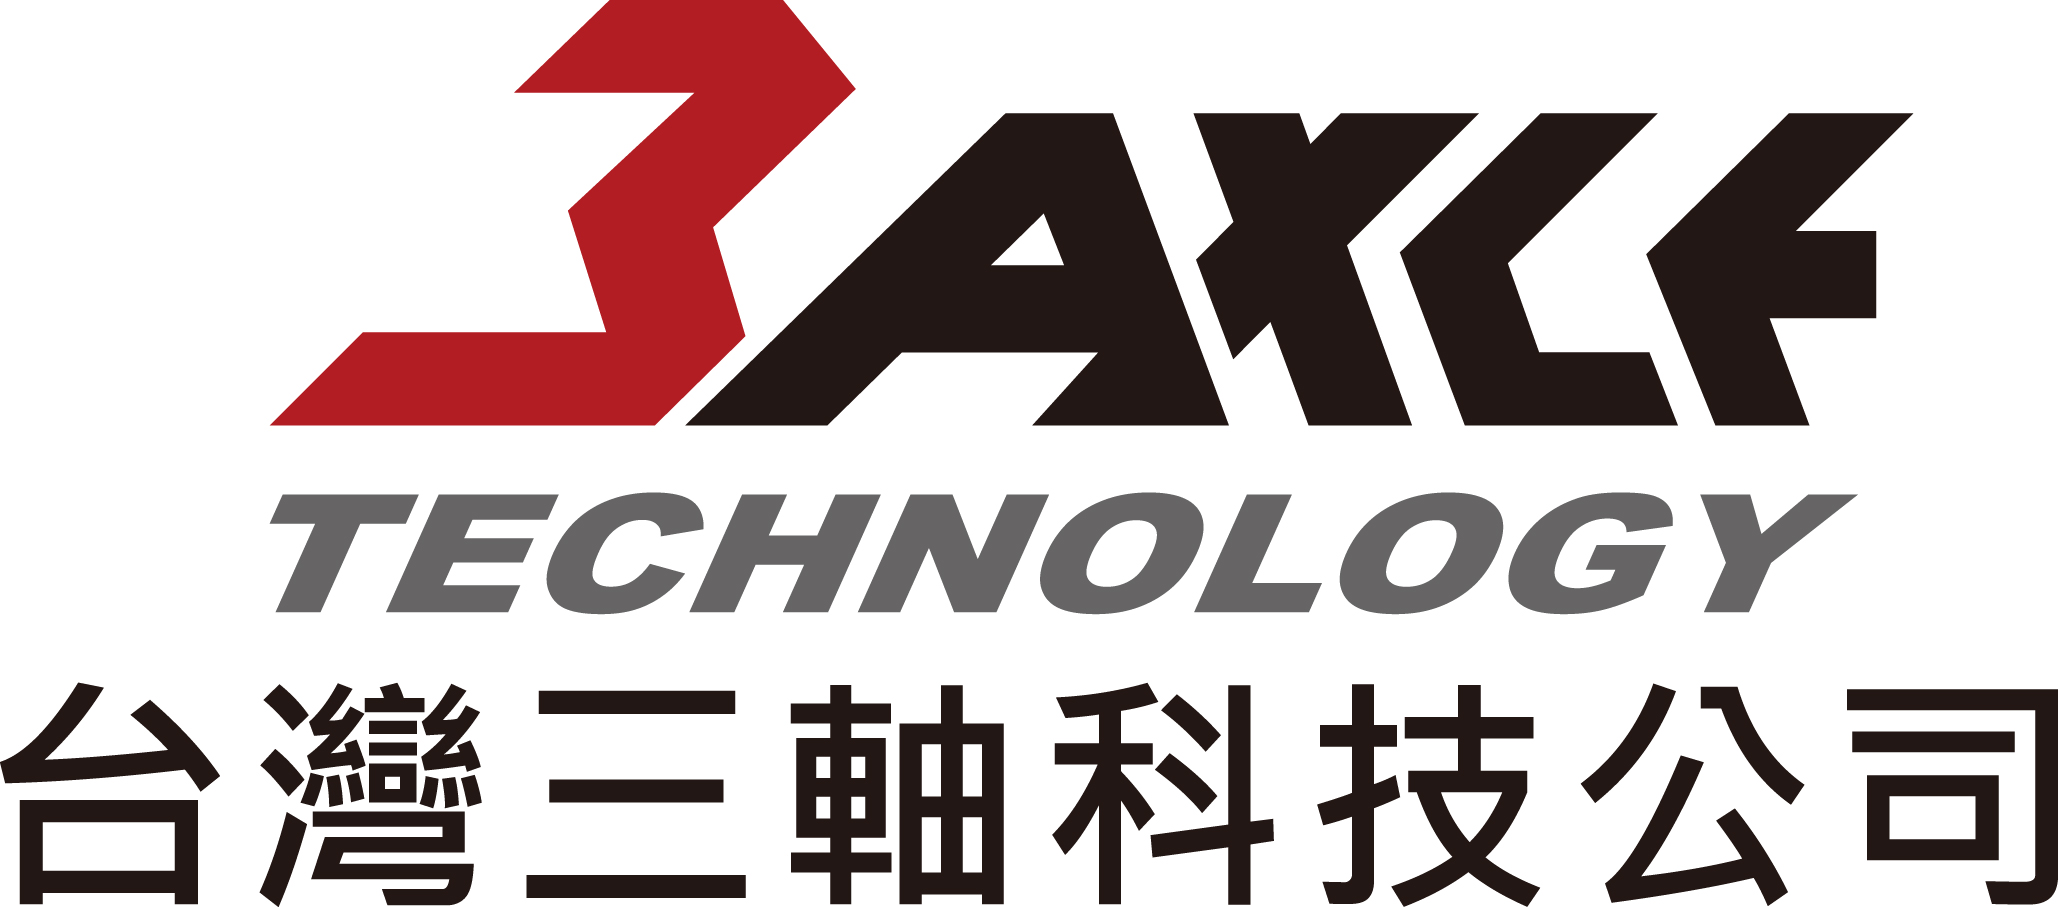 TAIWAN 3AXLE TECHNOLOGY CO., LTD